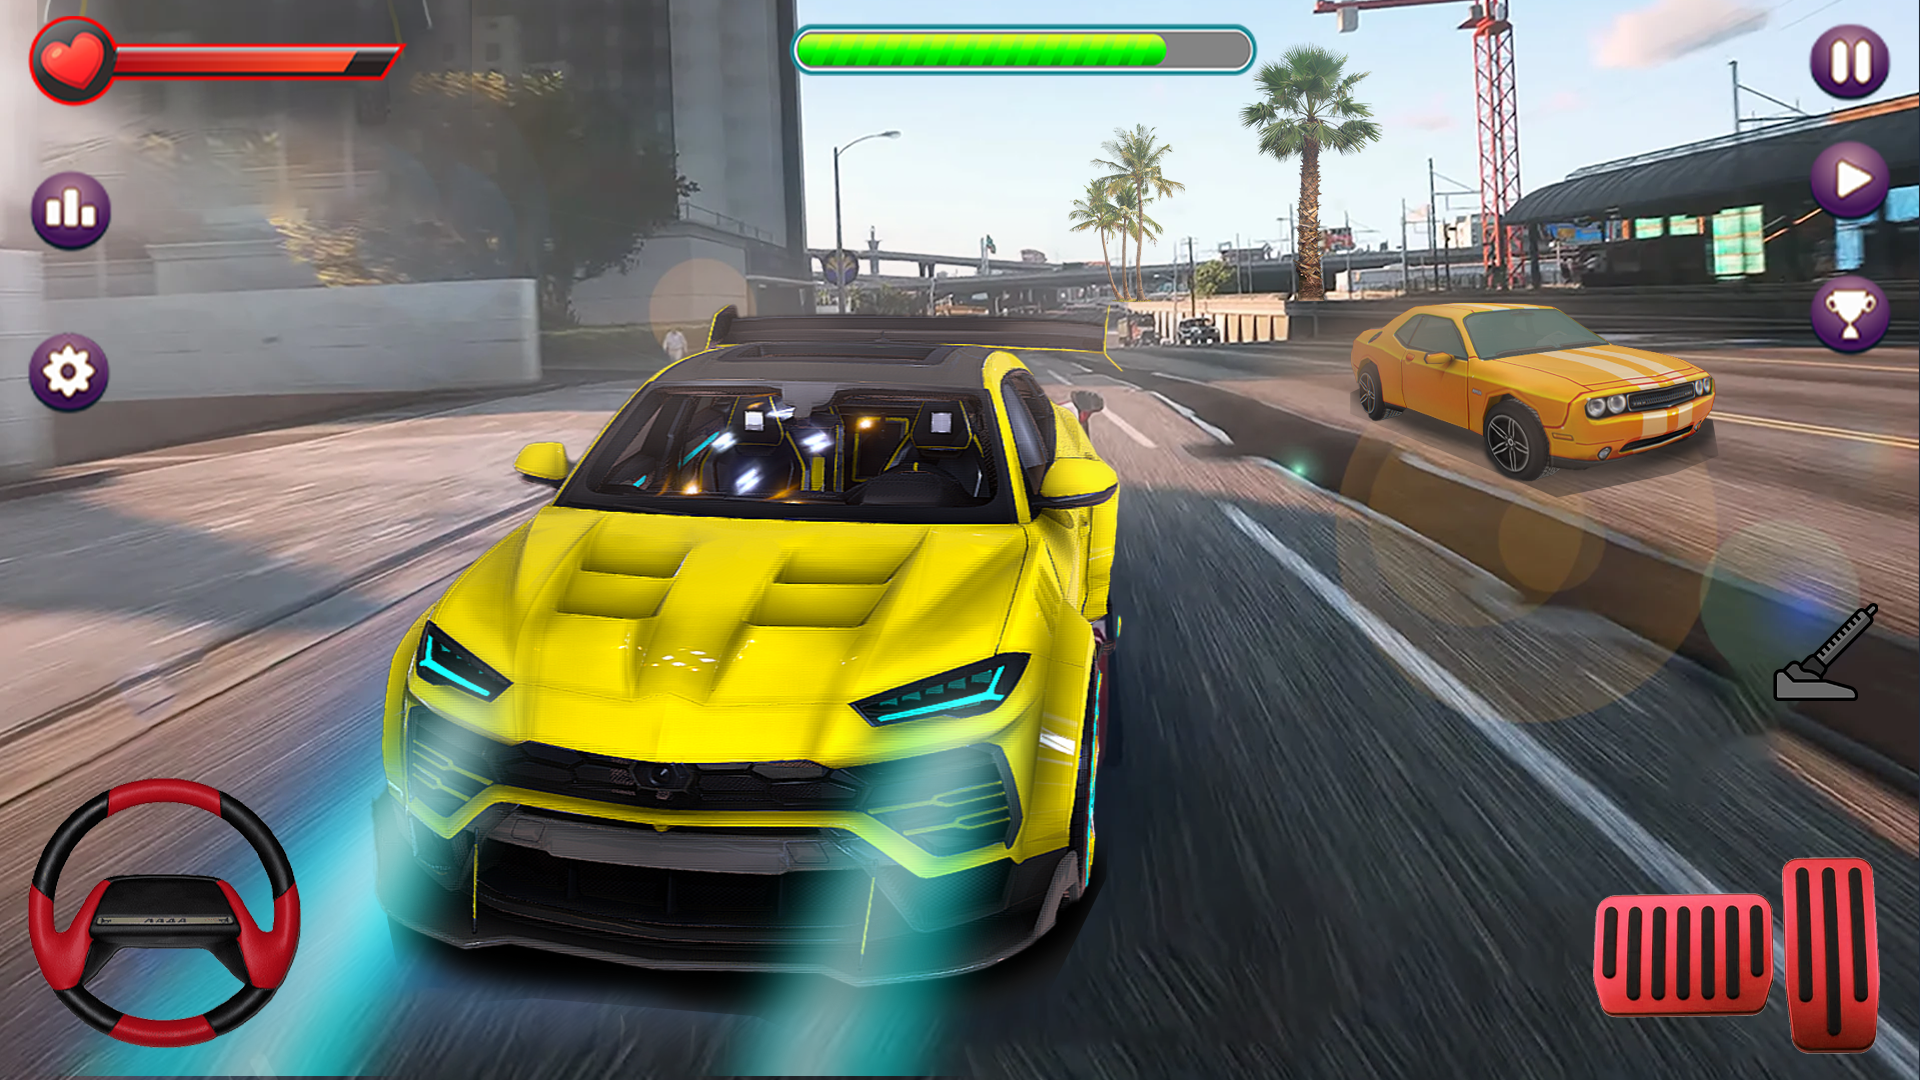 Delta Car Racing Games 3D APK (Android Game) (Mod)